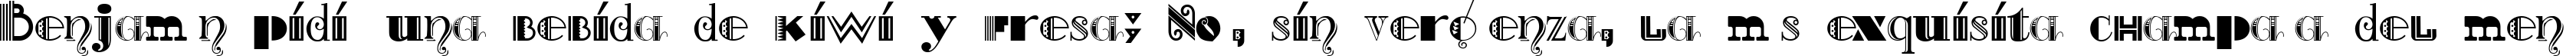 Пример написания шрифтом Art-Decorina текста на испанском